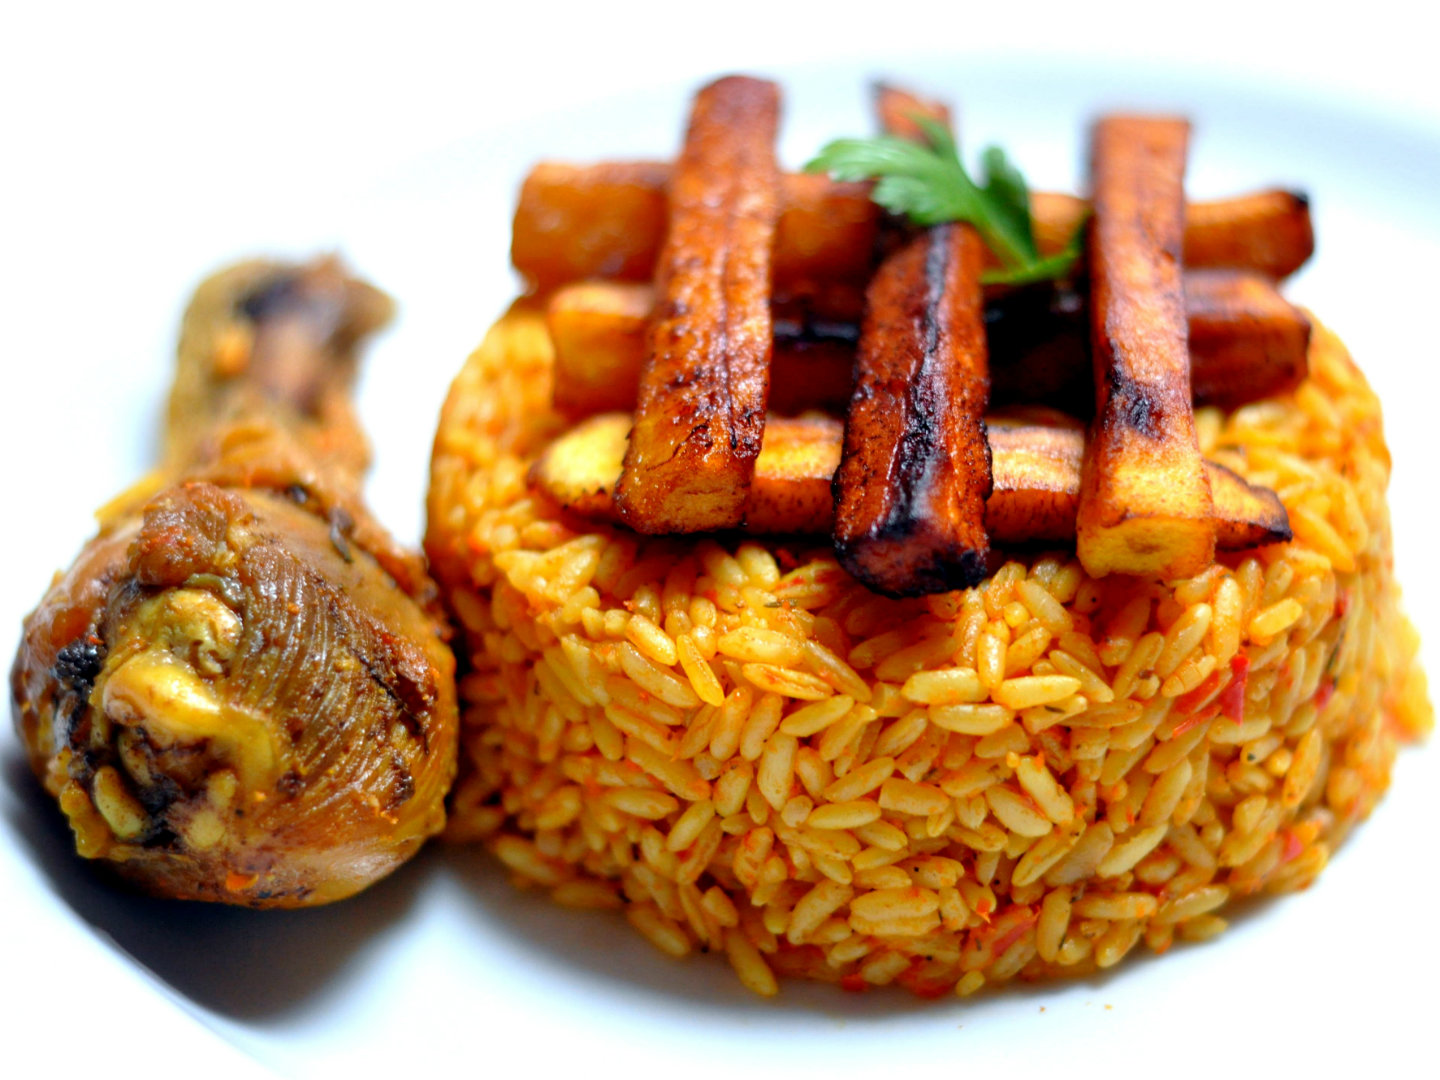 Recipe: The national dish of Nigeria - Jollof rice